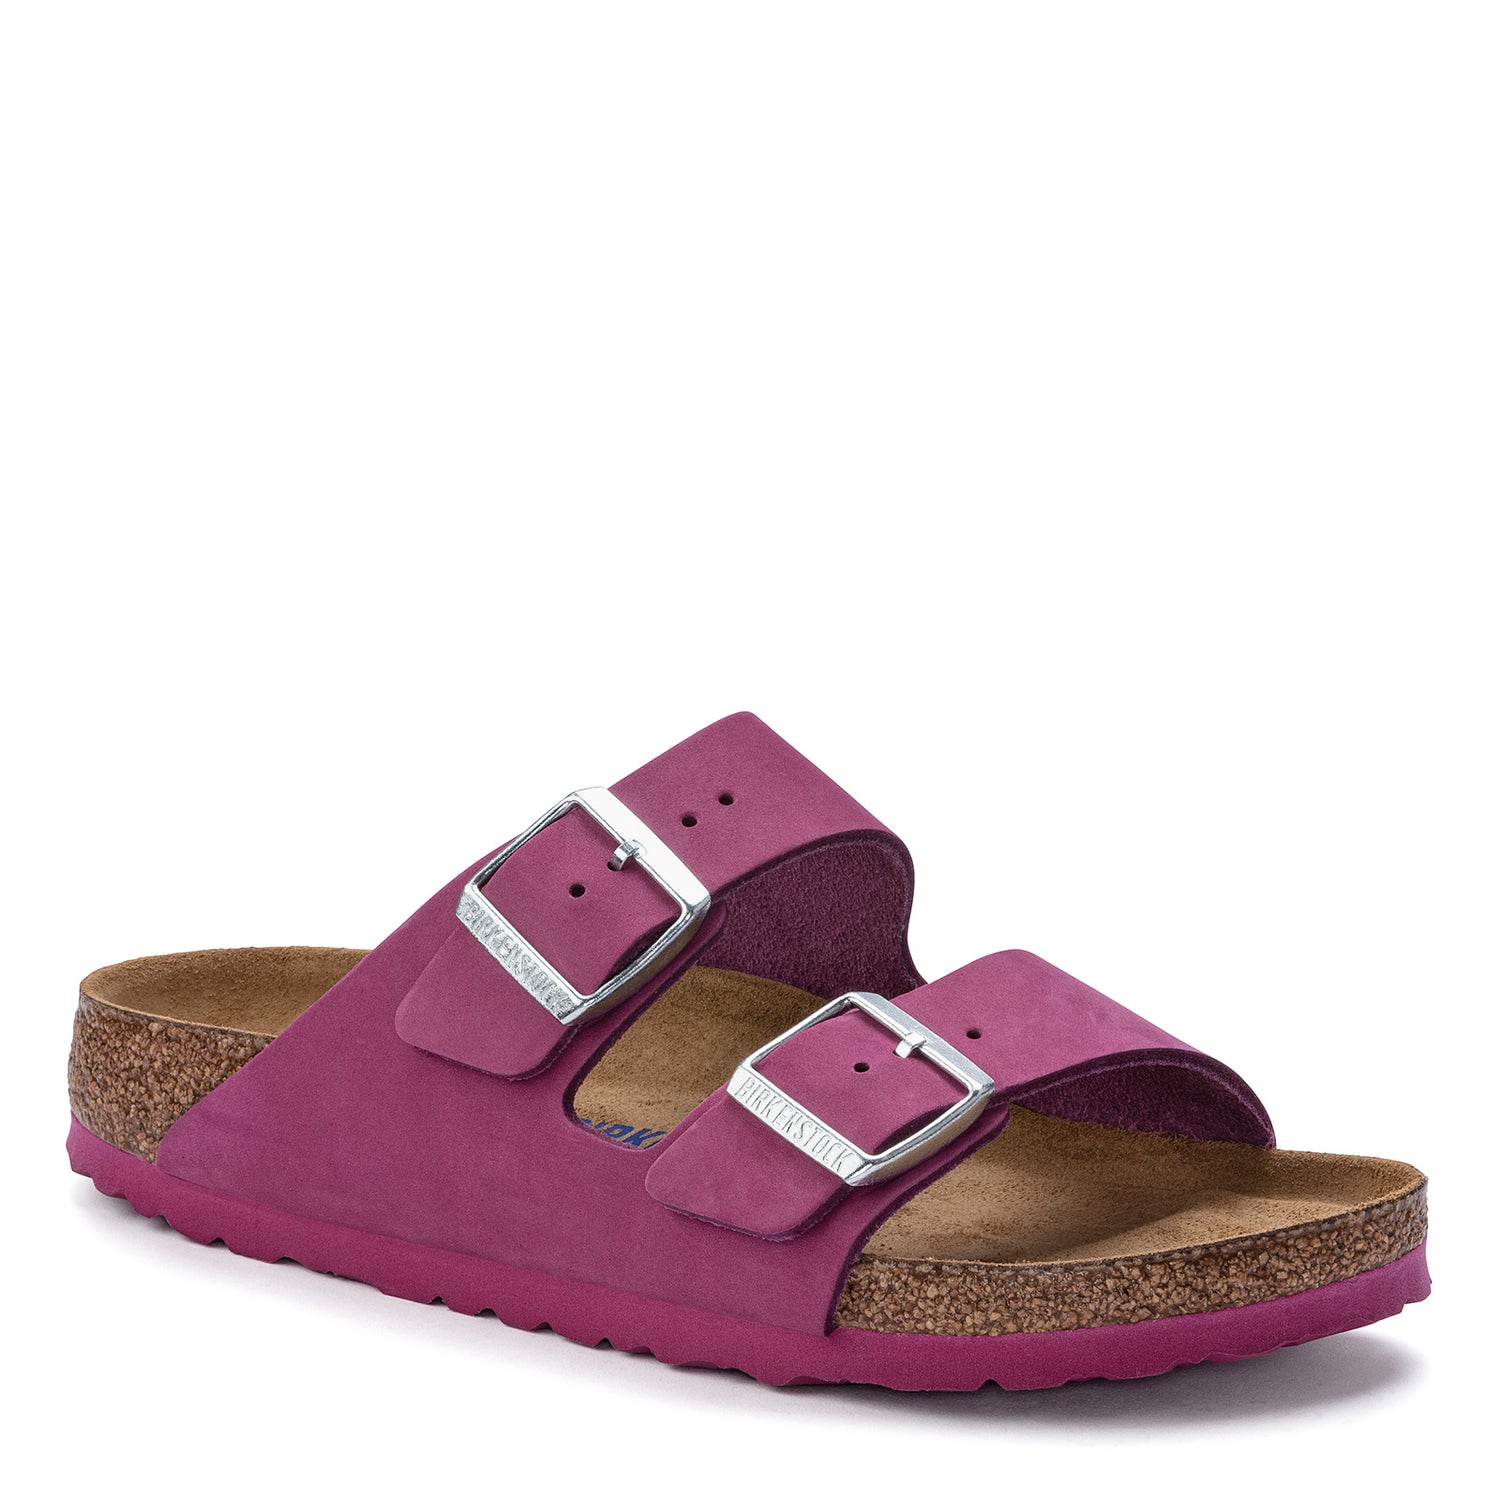 Peltz Shoes  Women's Birkenstock Arizona Soft Footbed Sandal - Narrow Width FUCHSIA 1023 391 N